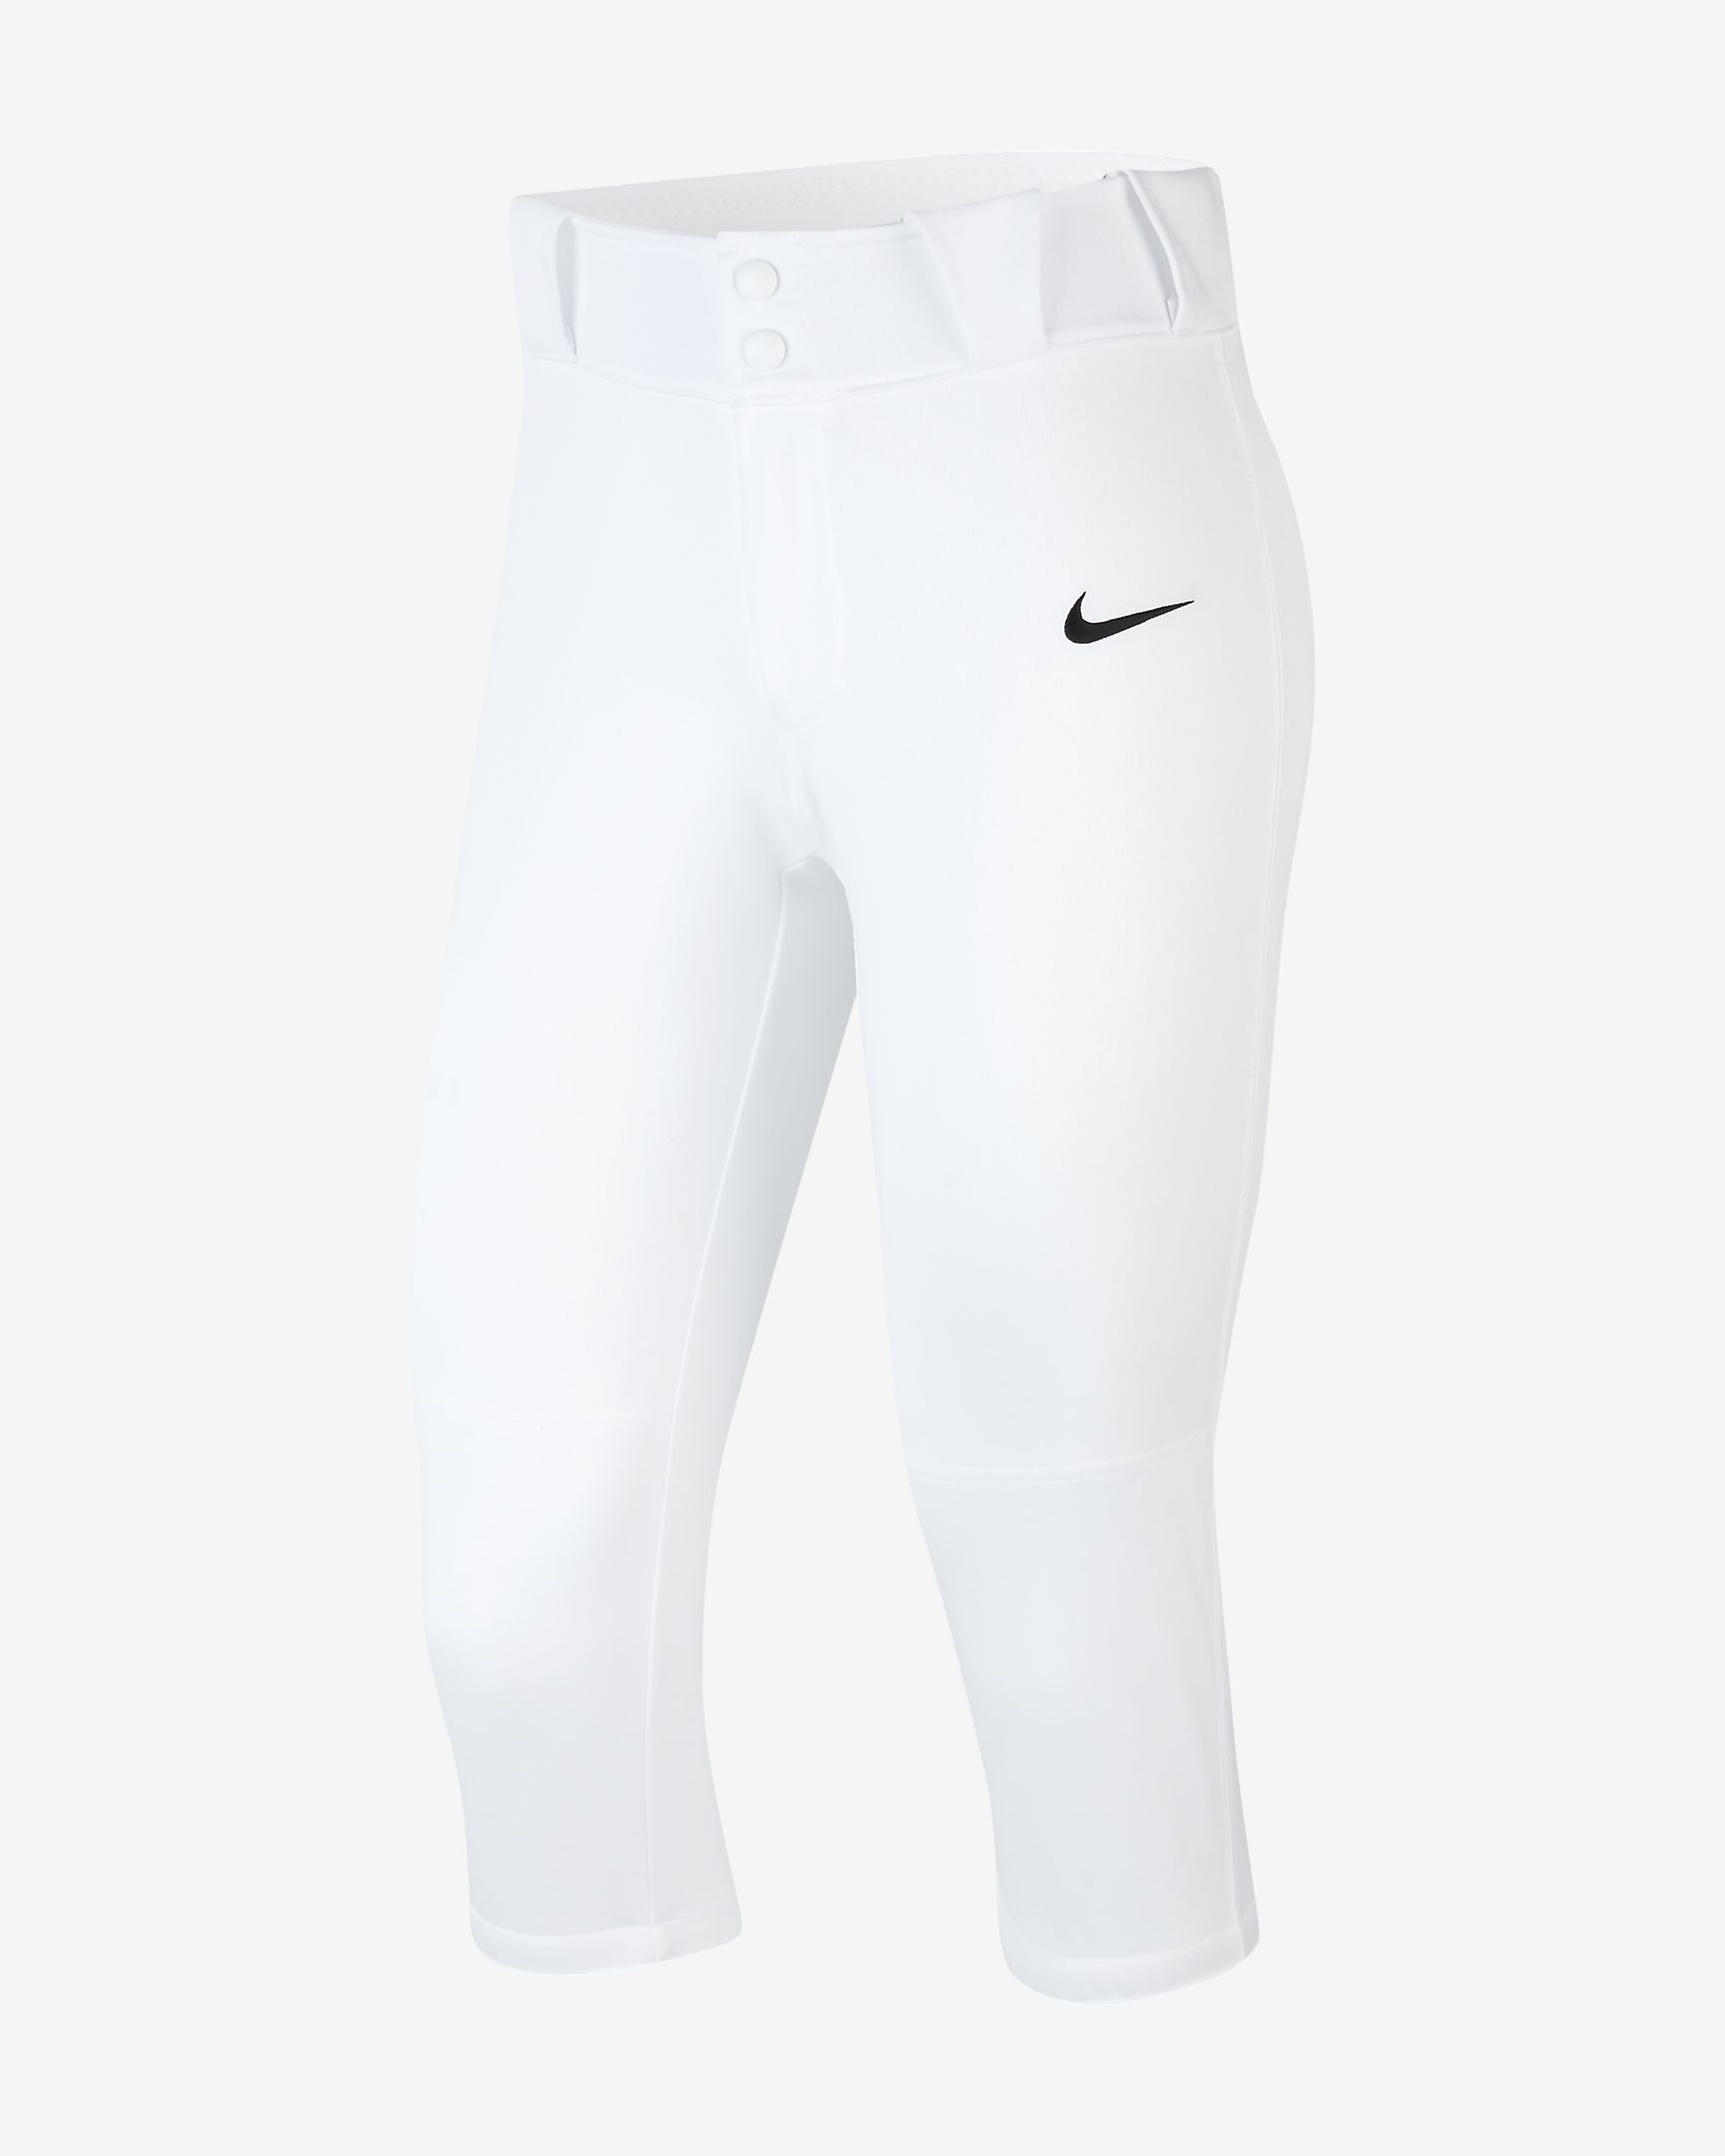 BLANK / NON-DECORATED Nike Team Diamond Invader 3/4 Pants, White: sportpacks.com